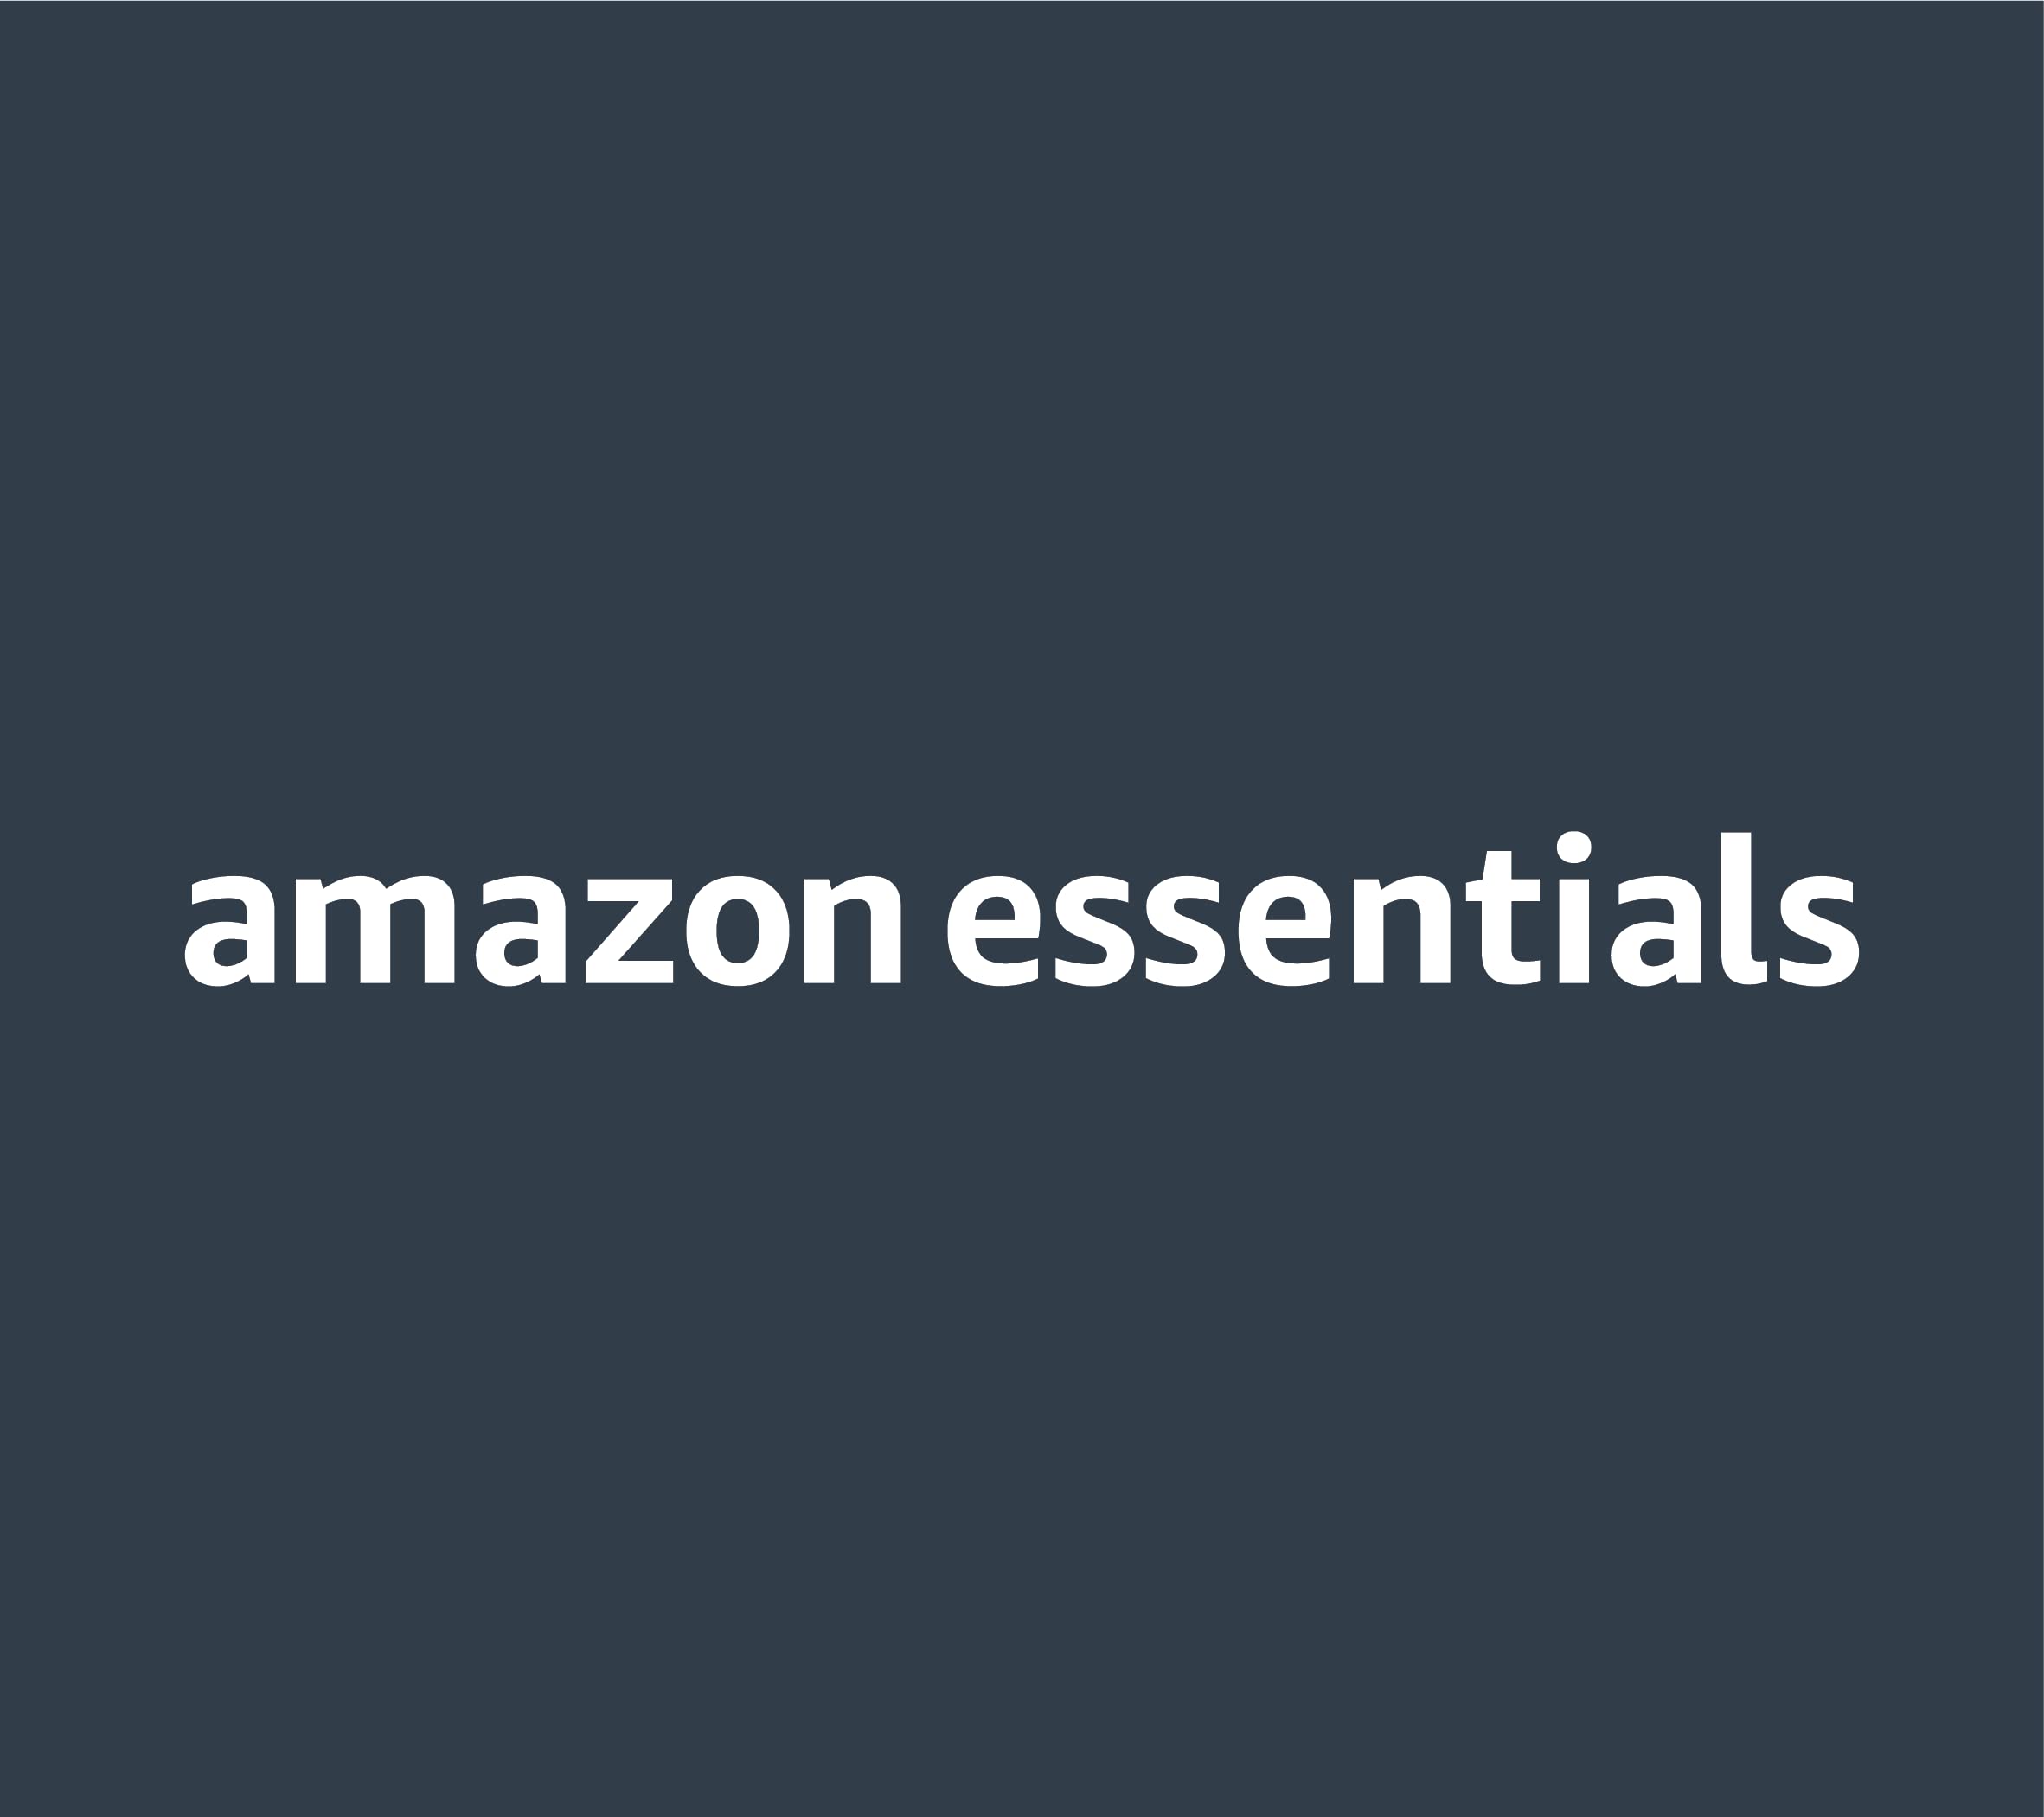 Amazon Essentials Women's Casual Crew Socks, 6 Pairs